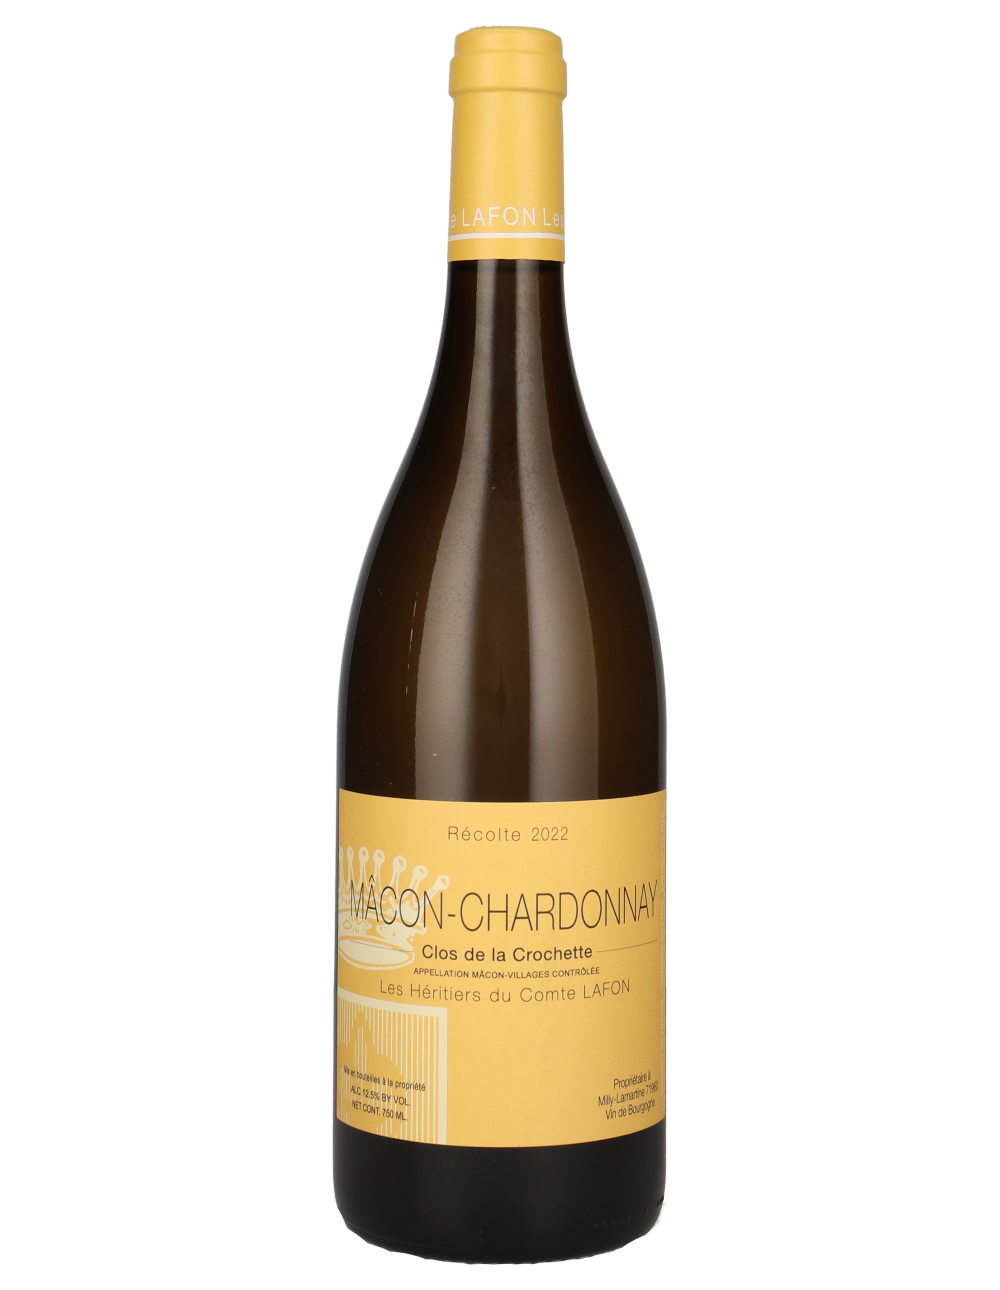 Macon-Chardonnay "Clos de la Crochette"